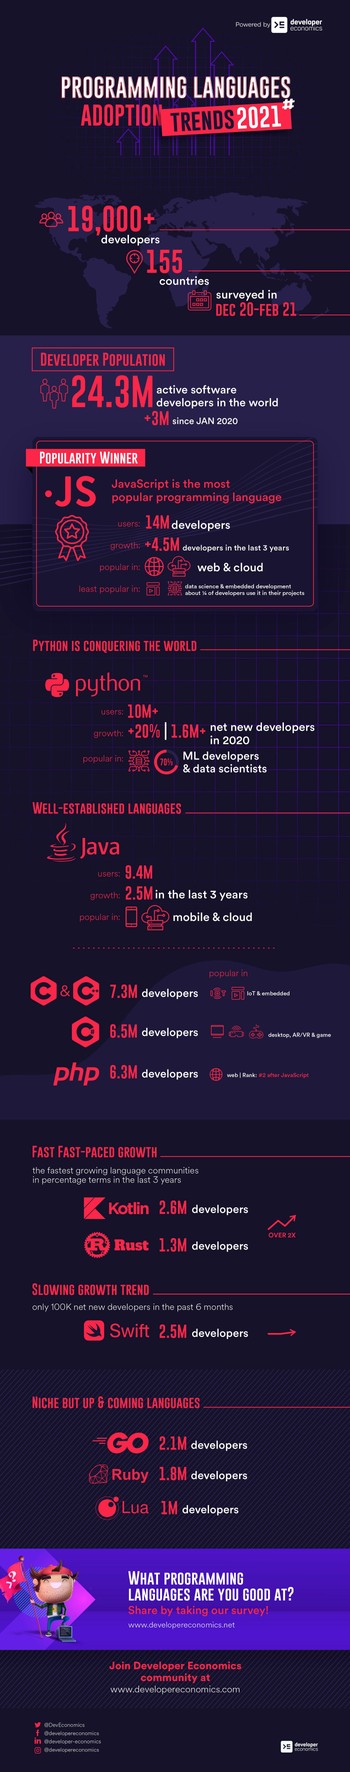 Infographic: Programming languages adoption trends 2021